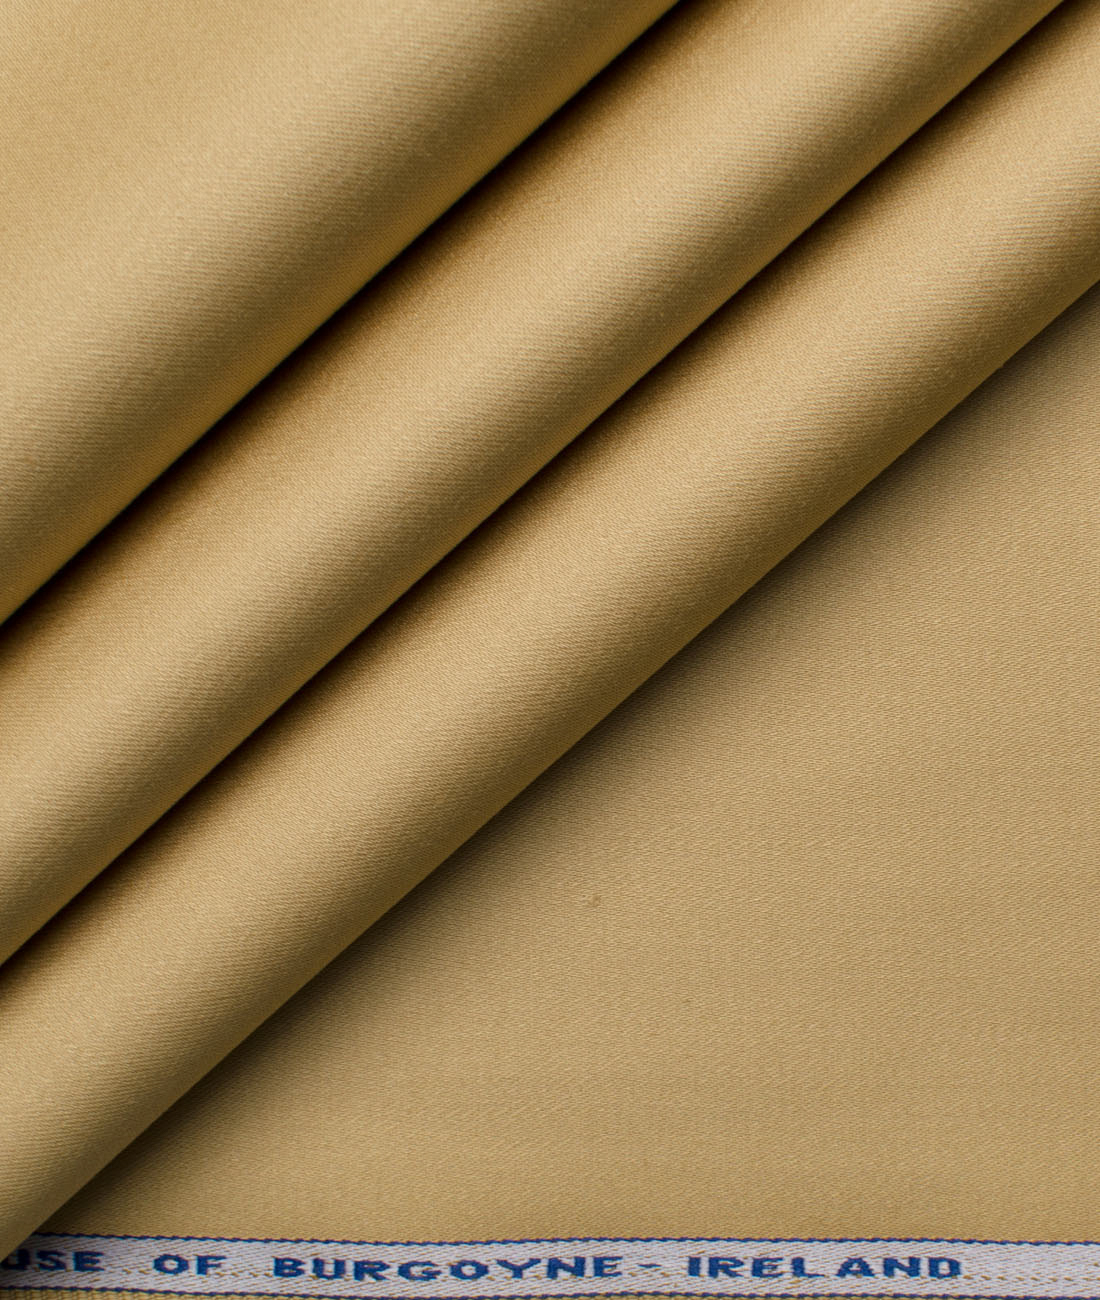 Trouser material stock image. Image of pants, garment - 37512765